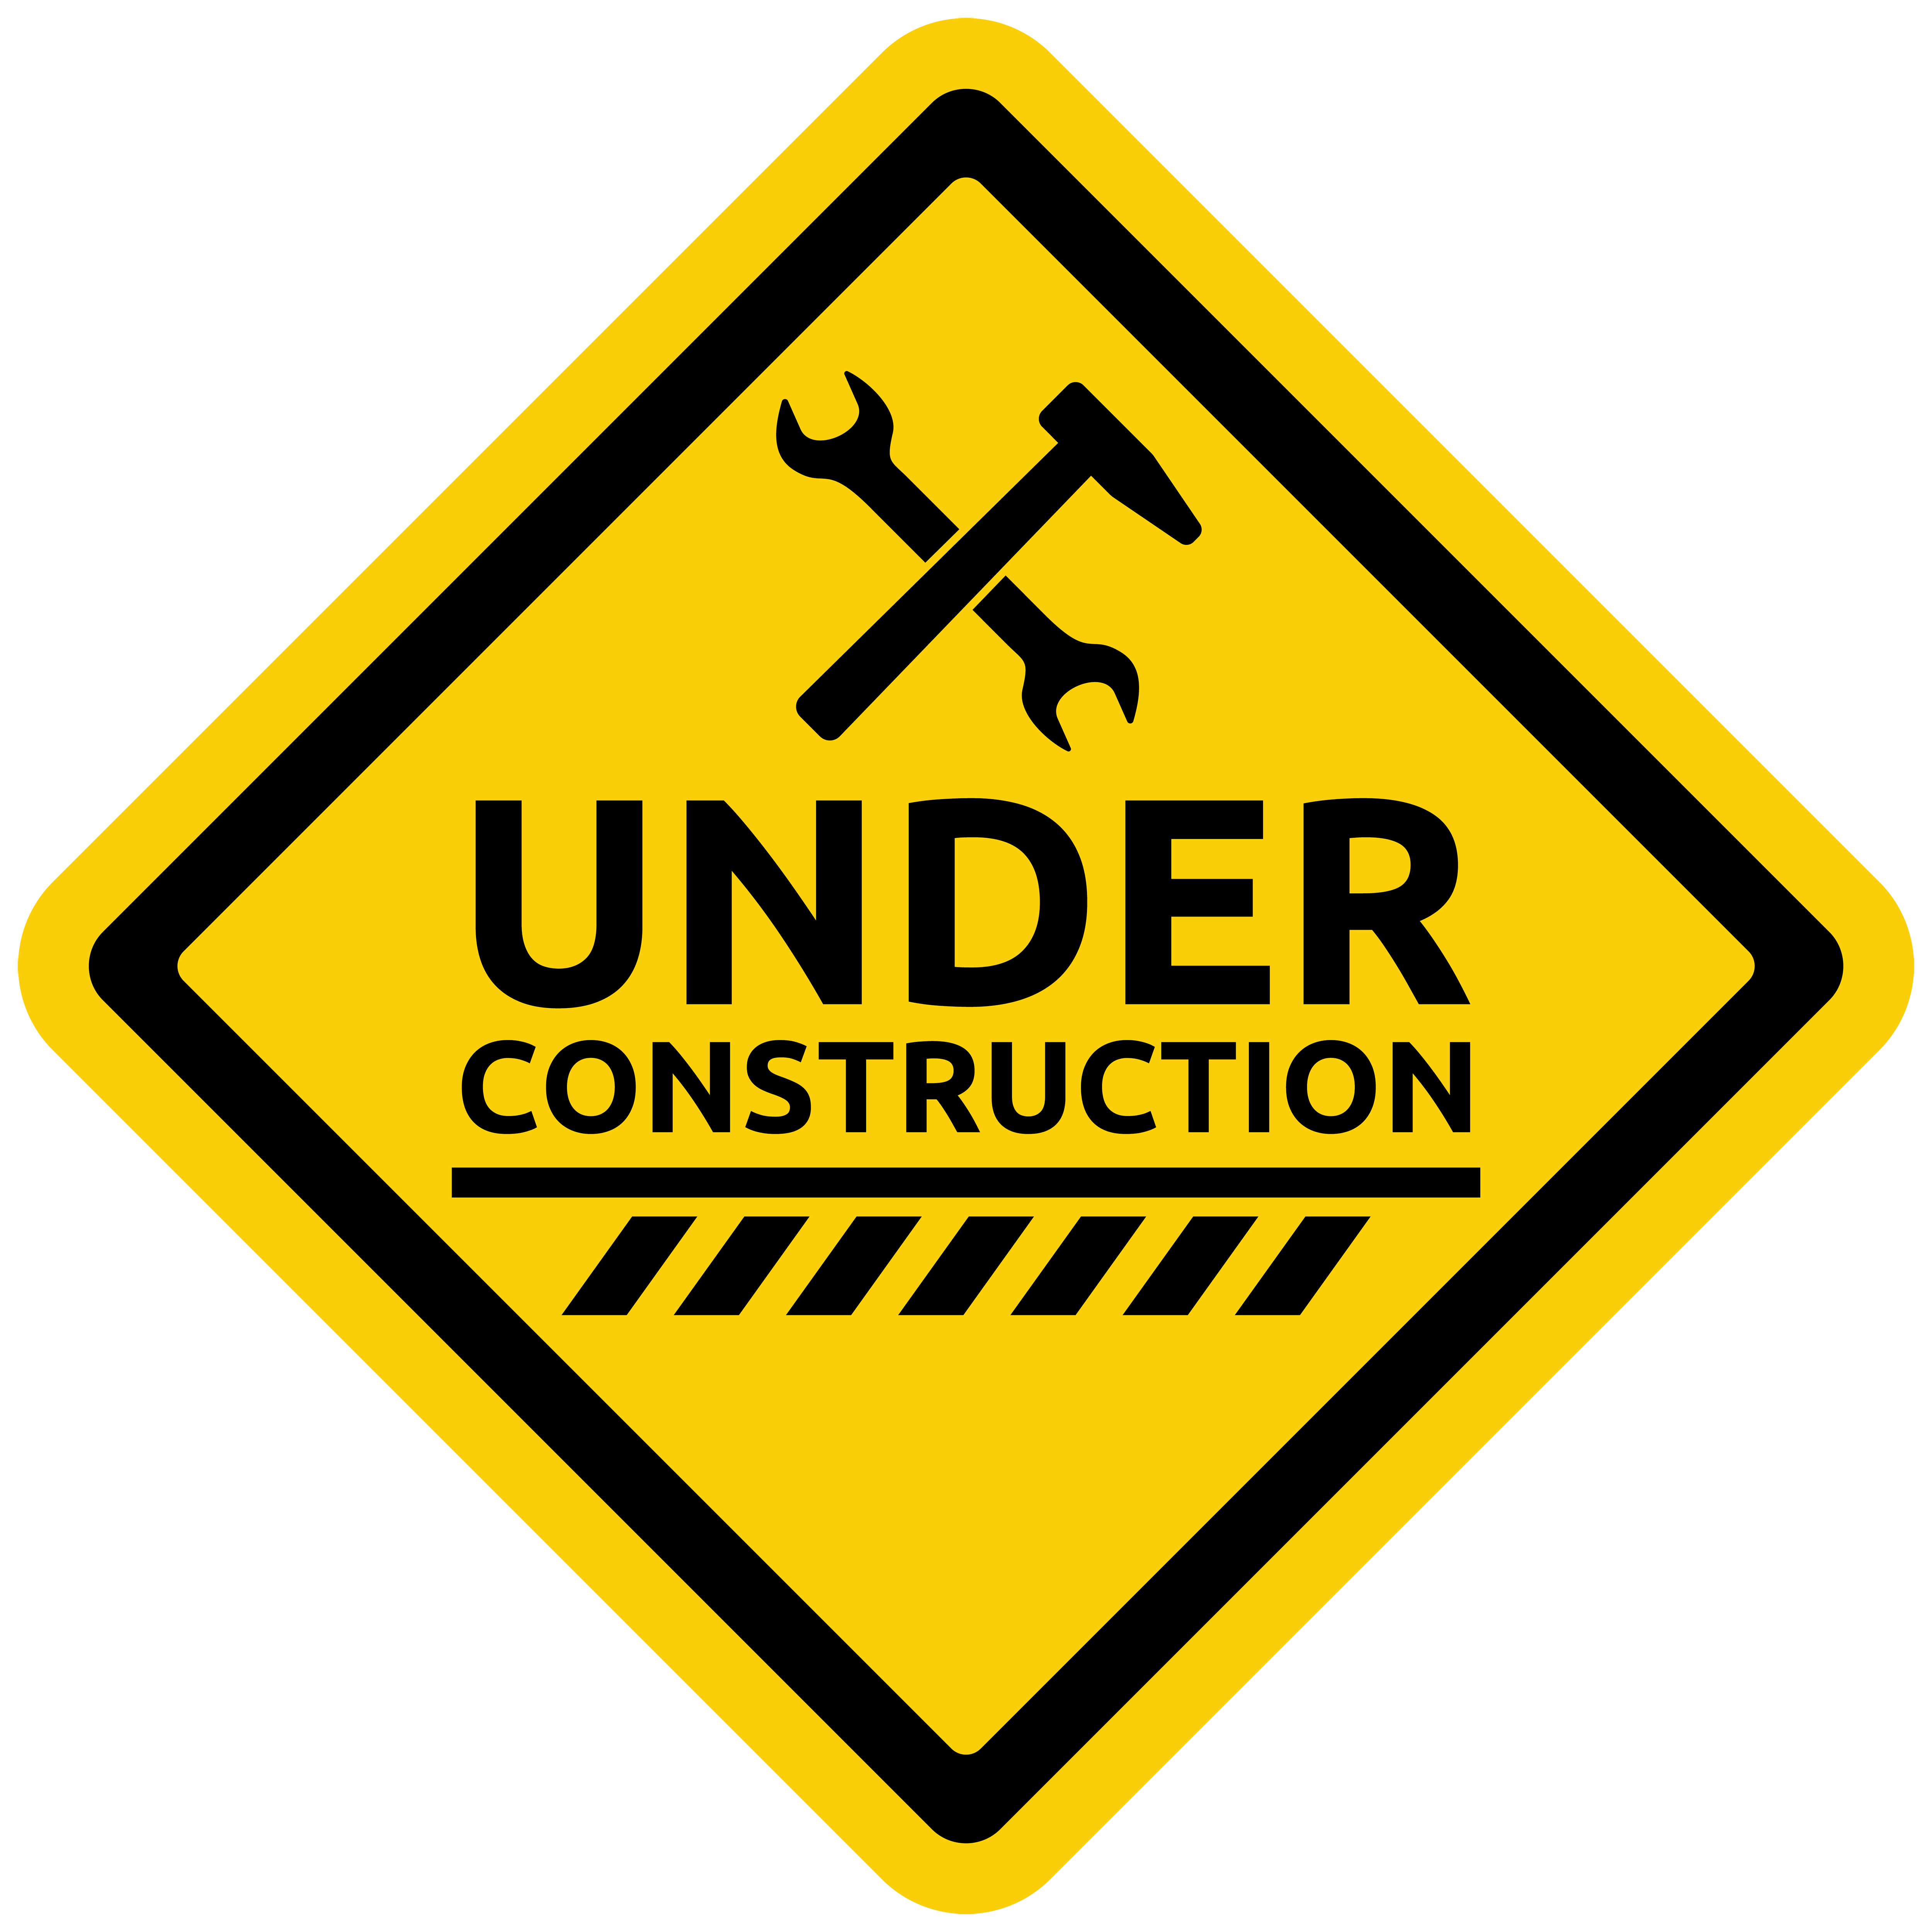 Under warning png best. Danger clipart construction sign